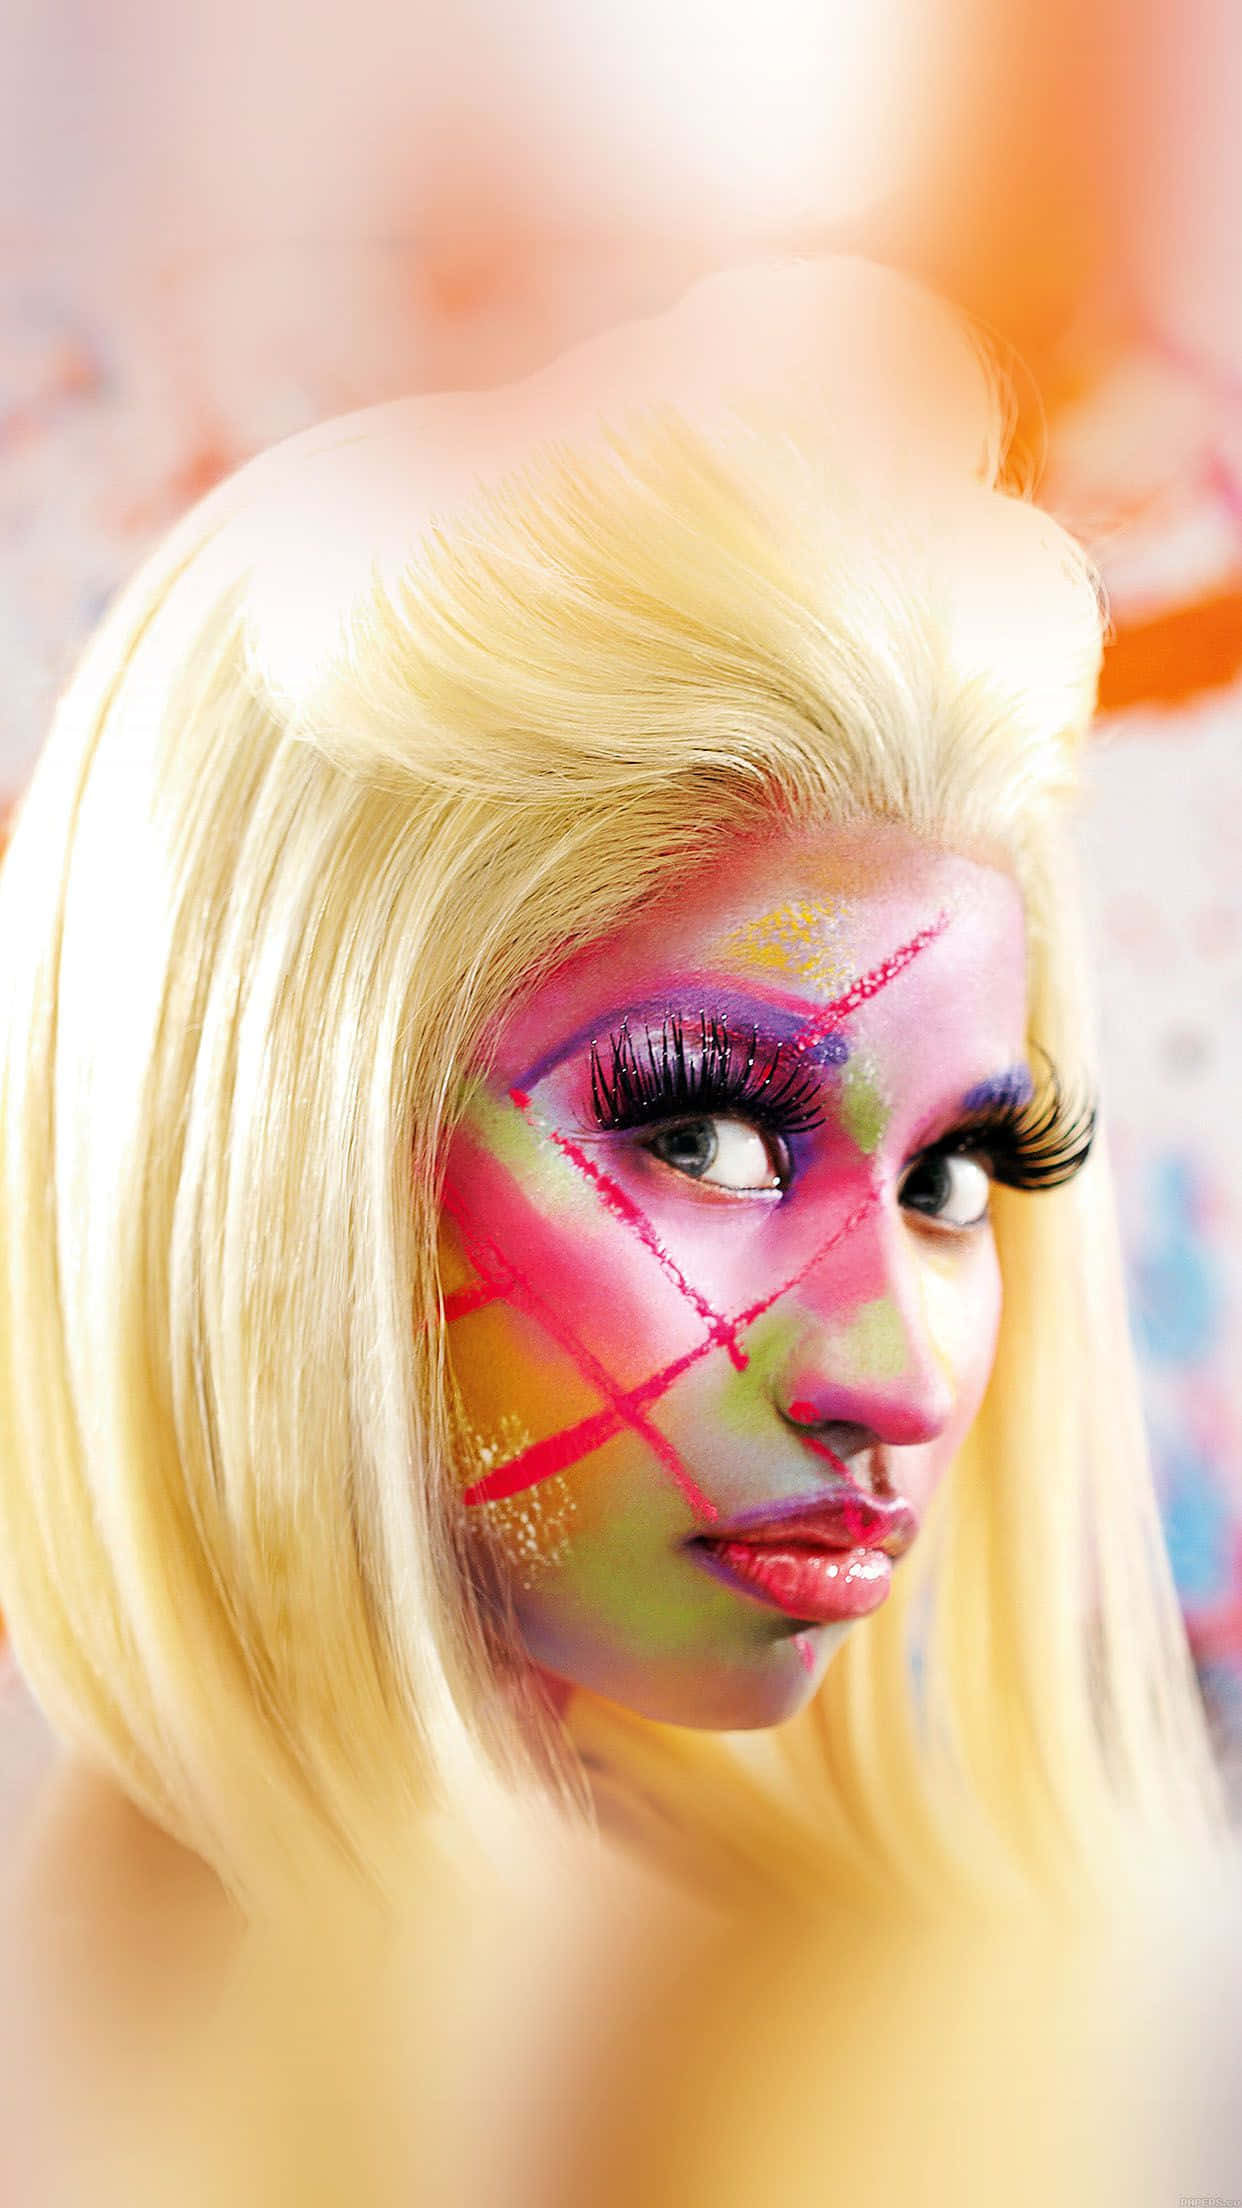 Nicki Minaj striking a fierce pose in a colorful outfit